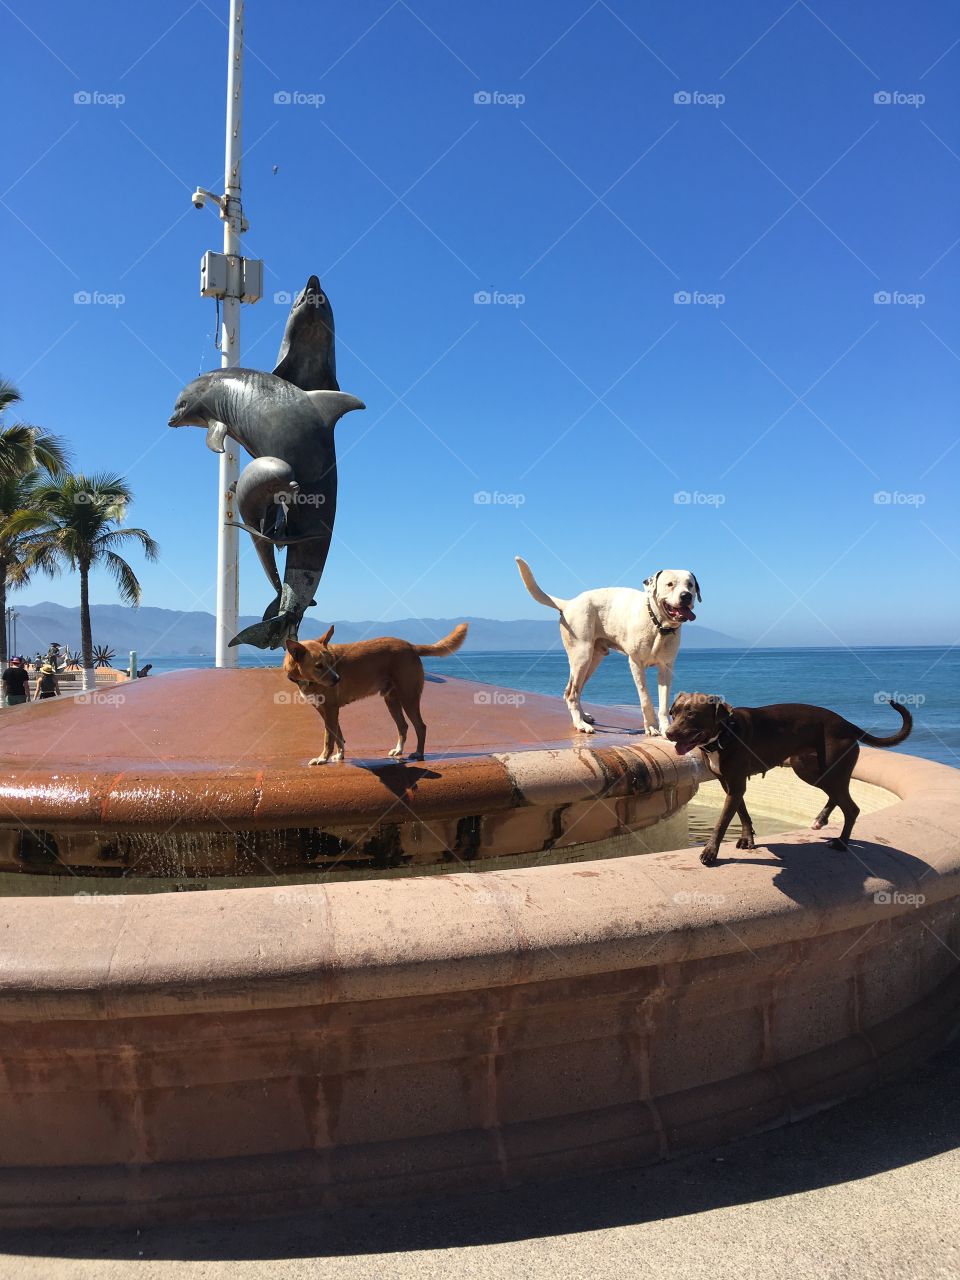 Dogs enjoying the fountain on the boardwalk.